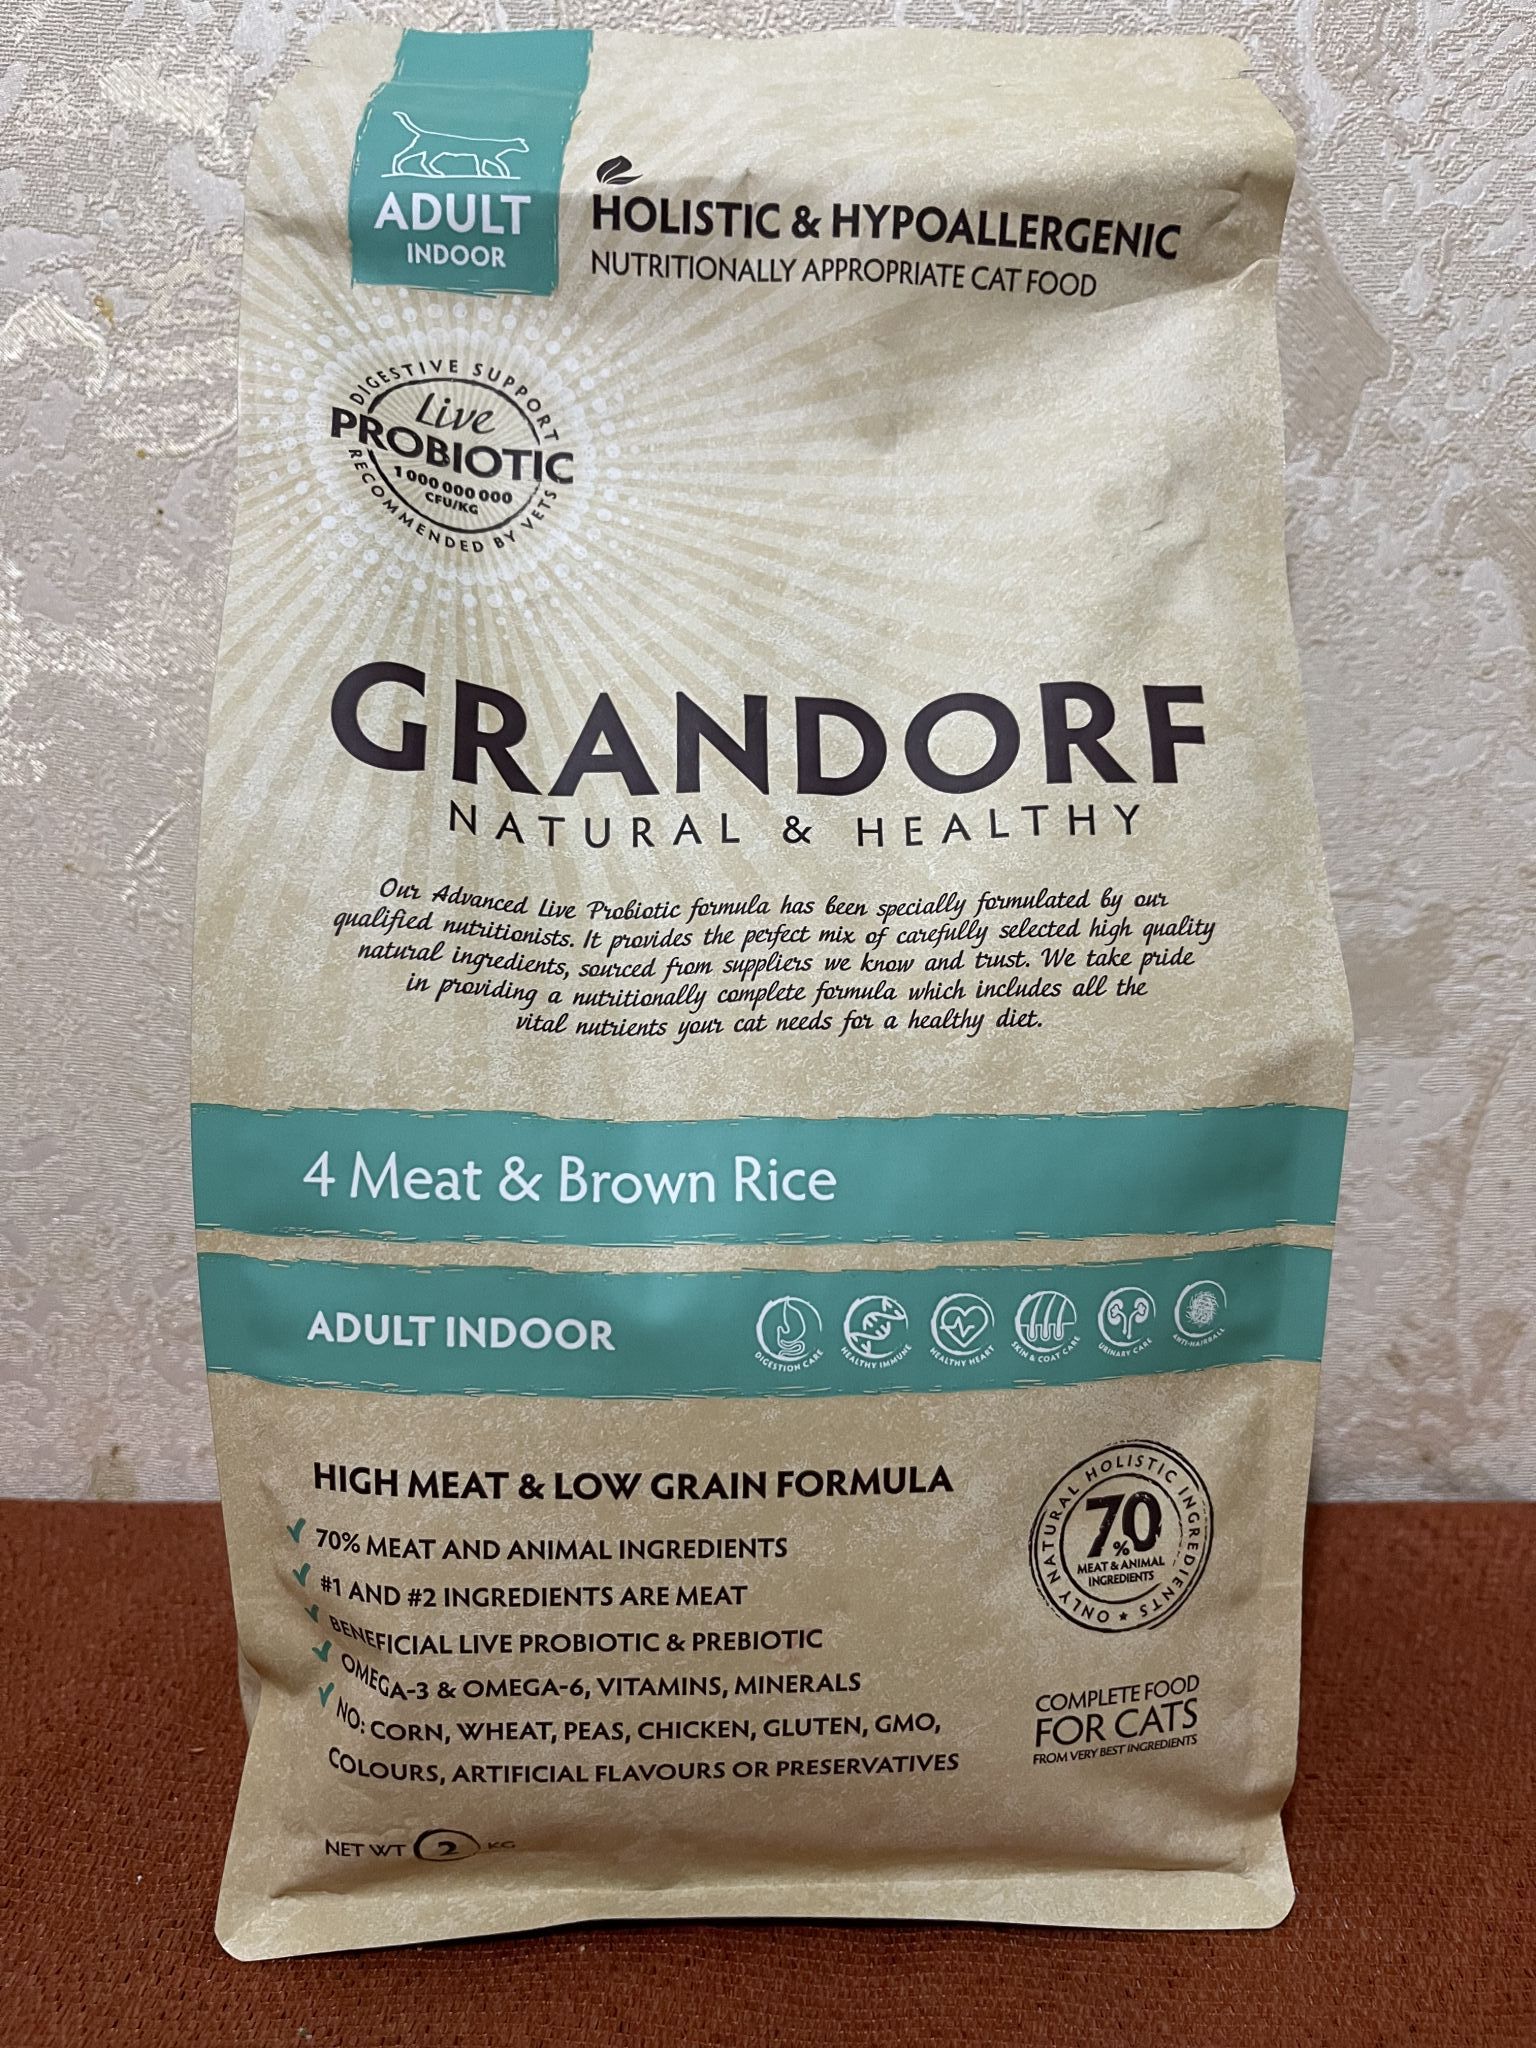 Grandorf сухой корм Adult Indoor Probiotic для взрослых домашних кошек 4 мяса, 2кг. Grandorf Cat 4meat Indoor Probiotic корм д/кошек, 4вида мяса.